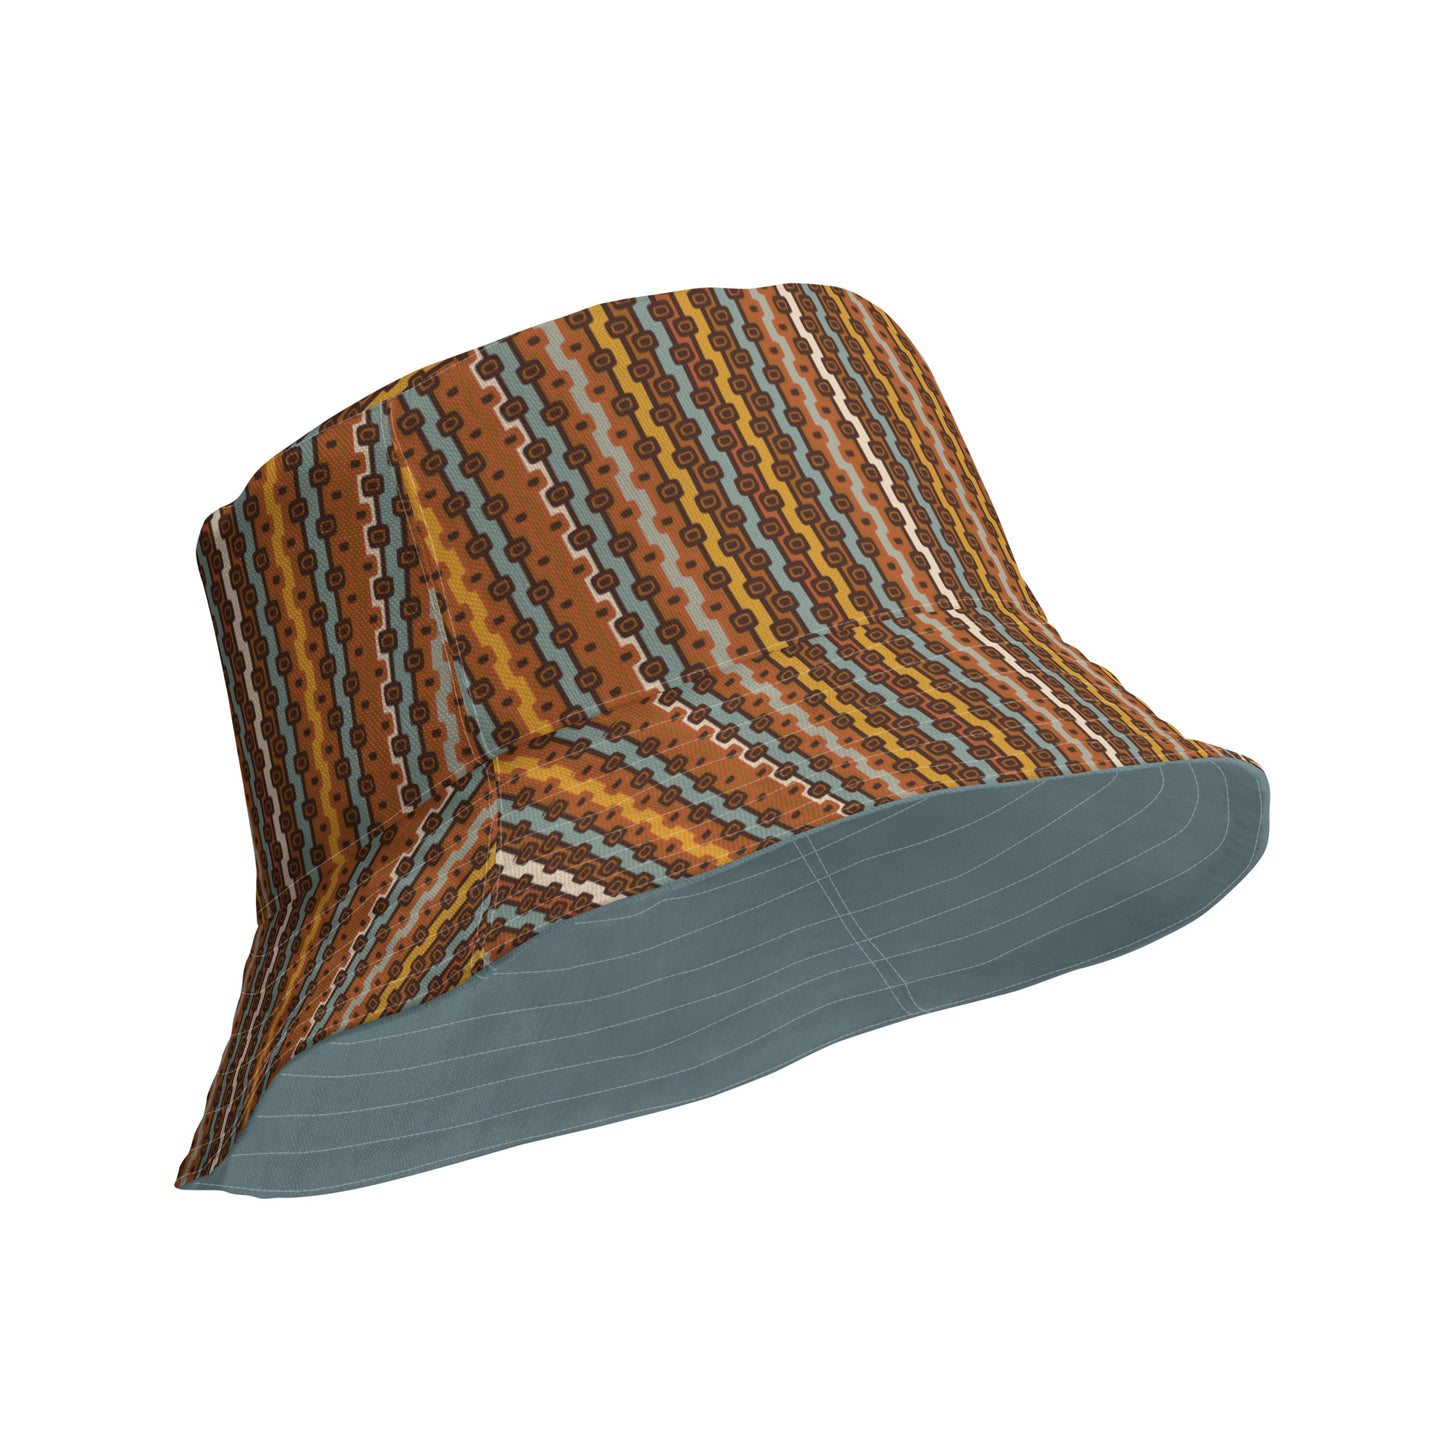 Retro Blue and Stripe Reversible bucket hat